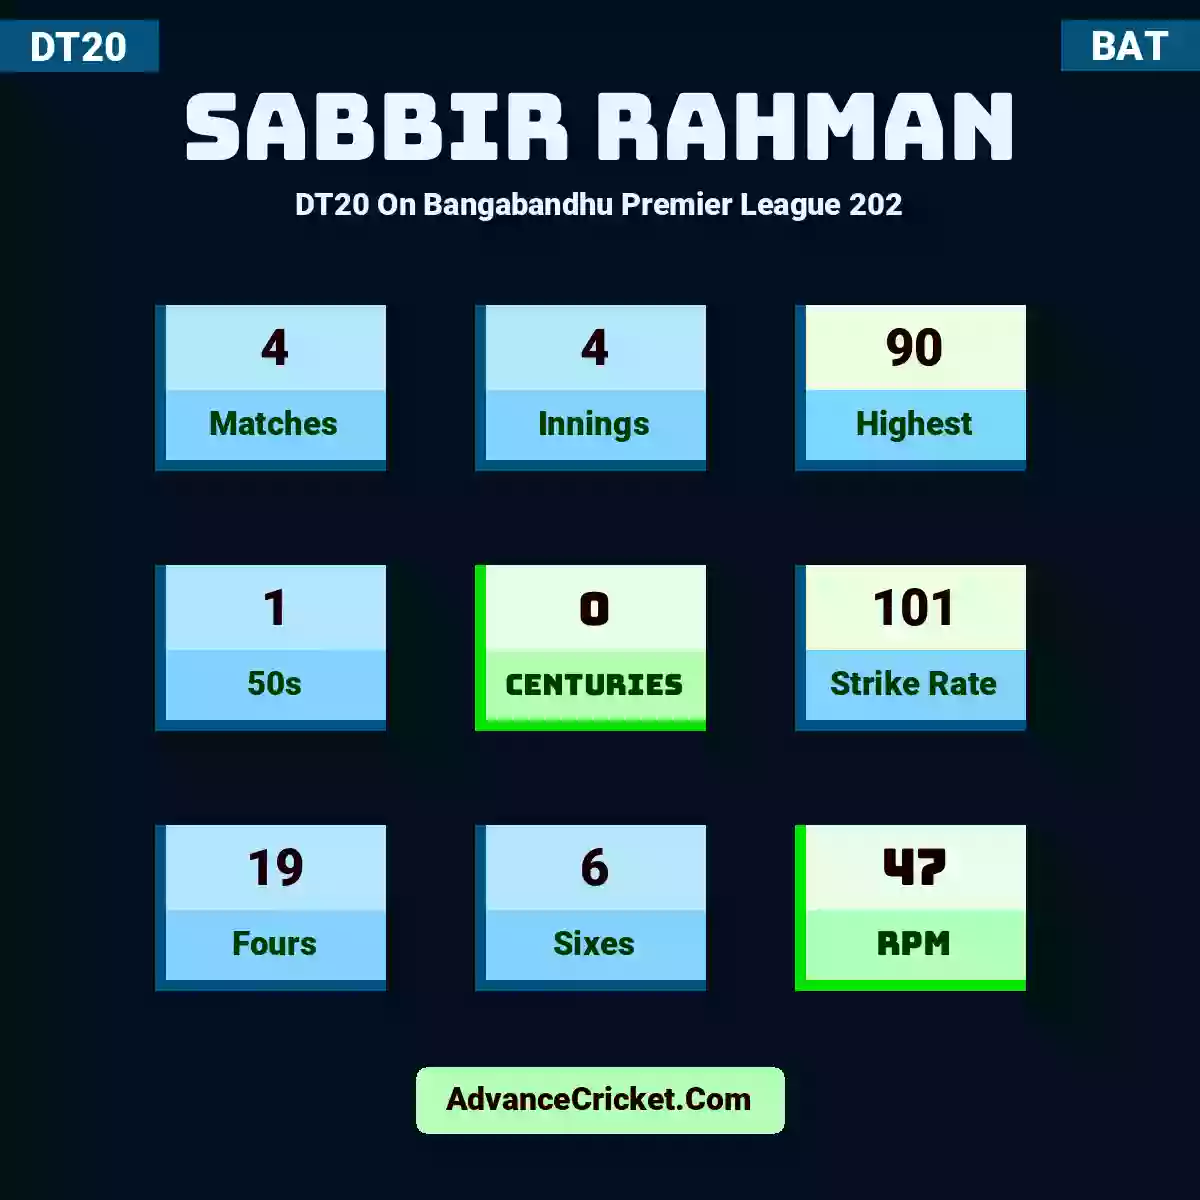 Sabbir Rahman DT20  On Bangabandhu Premier League 202, Sabbir Rahman played 4 matches, scored 90 runs as highest, 1 half-centuries, and 0 centuries, with a strike rate of 101. S.Rahman hit 19 fours and 6 sixes, with an RPM of 47.